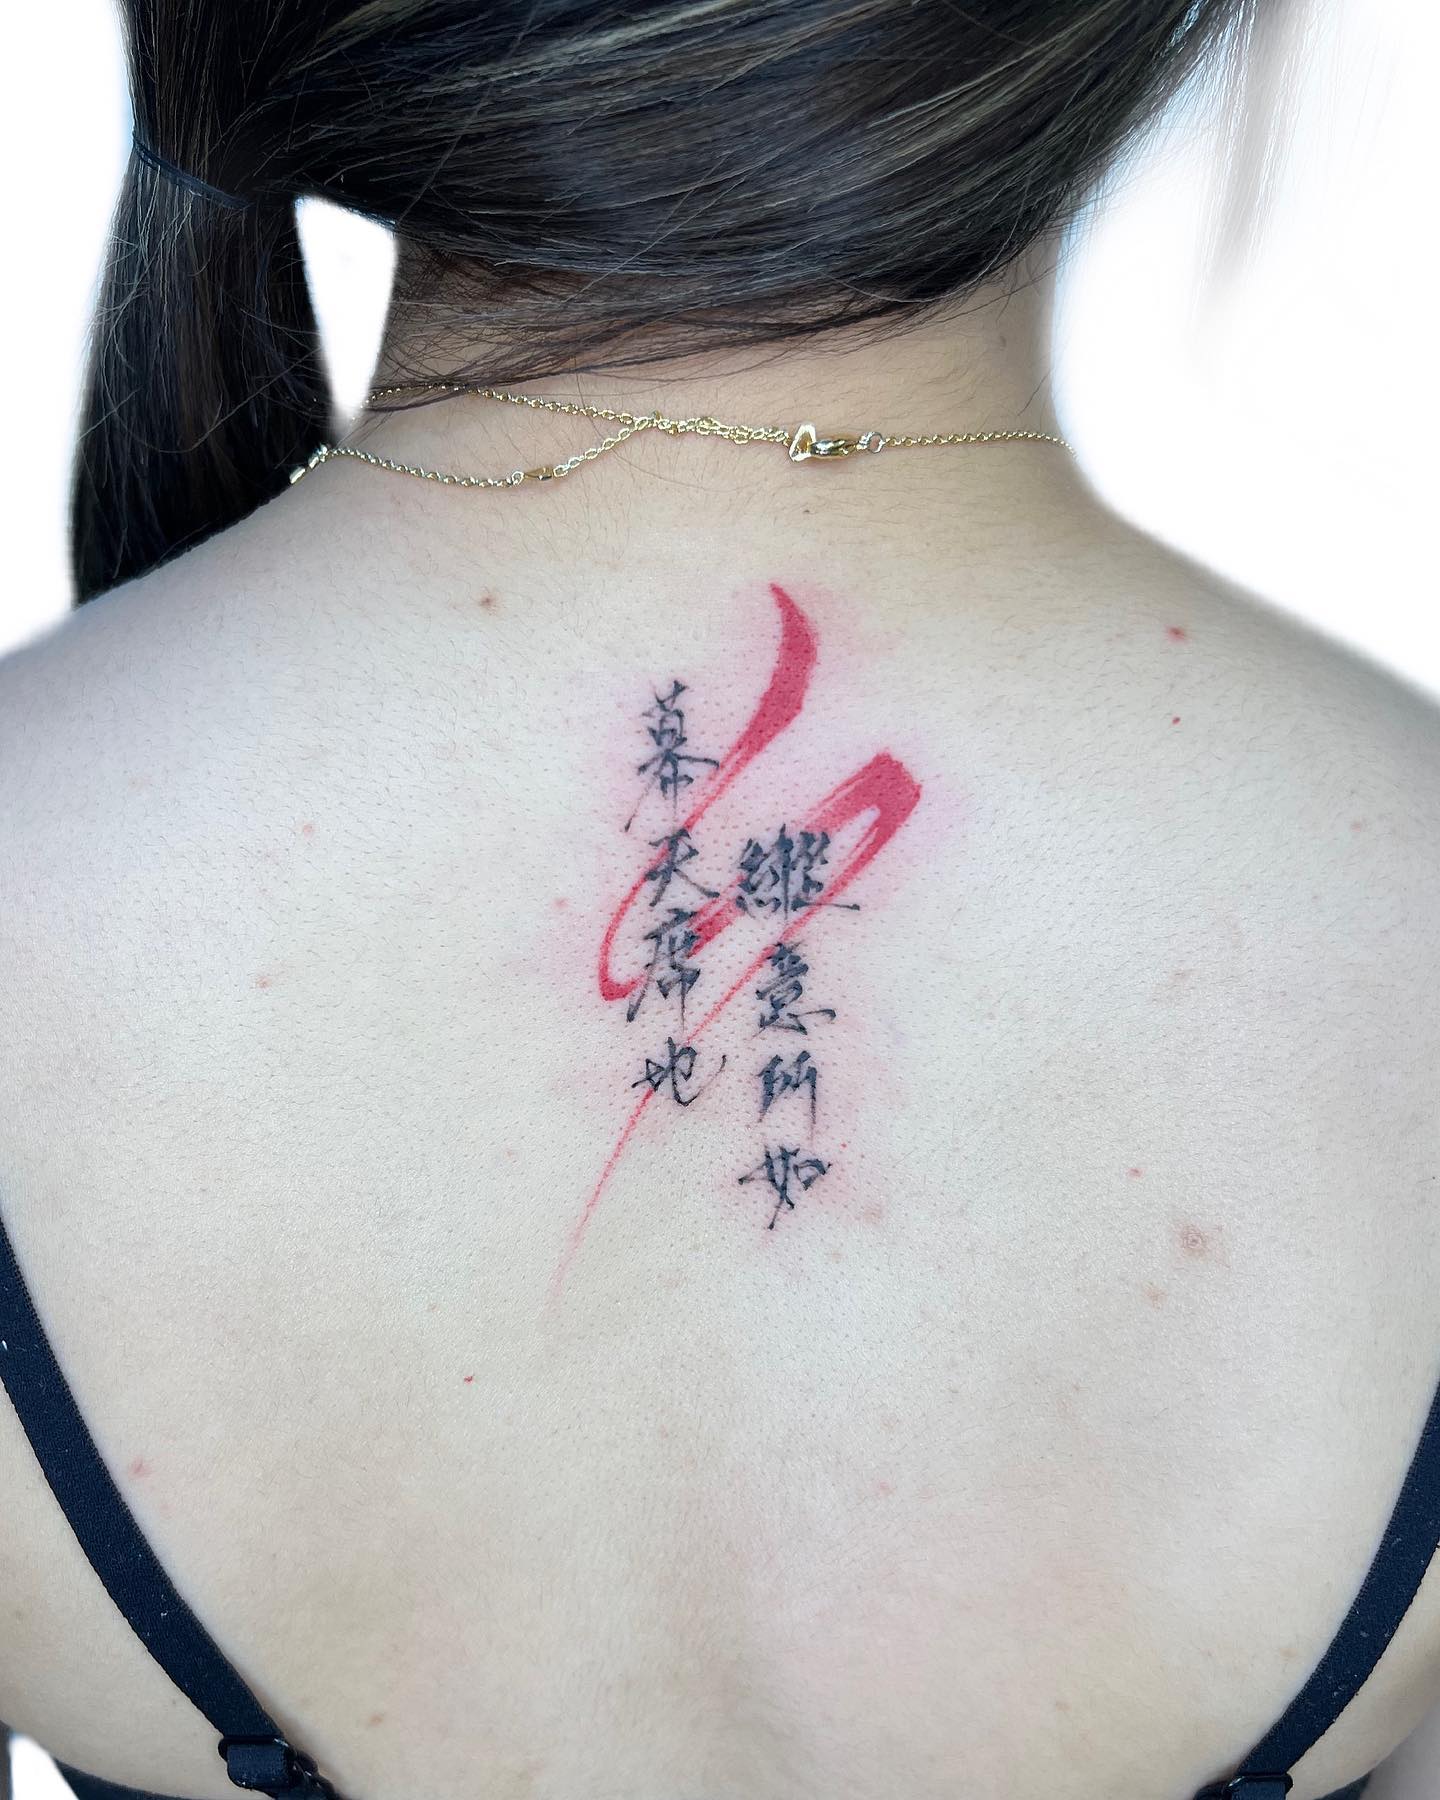 Tatuaje chino en la espalda con salpicaduras.